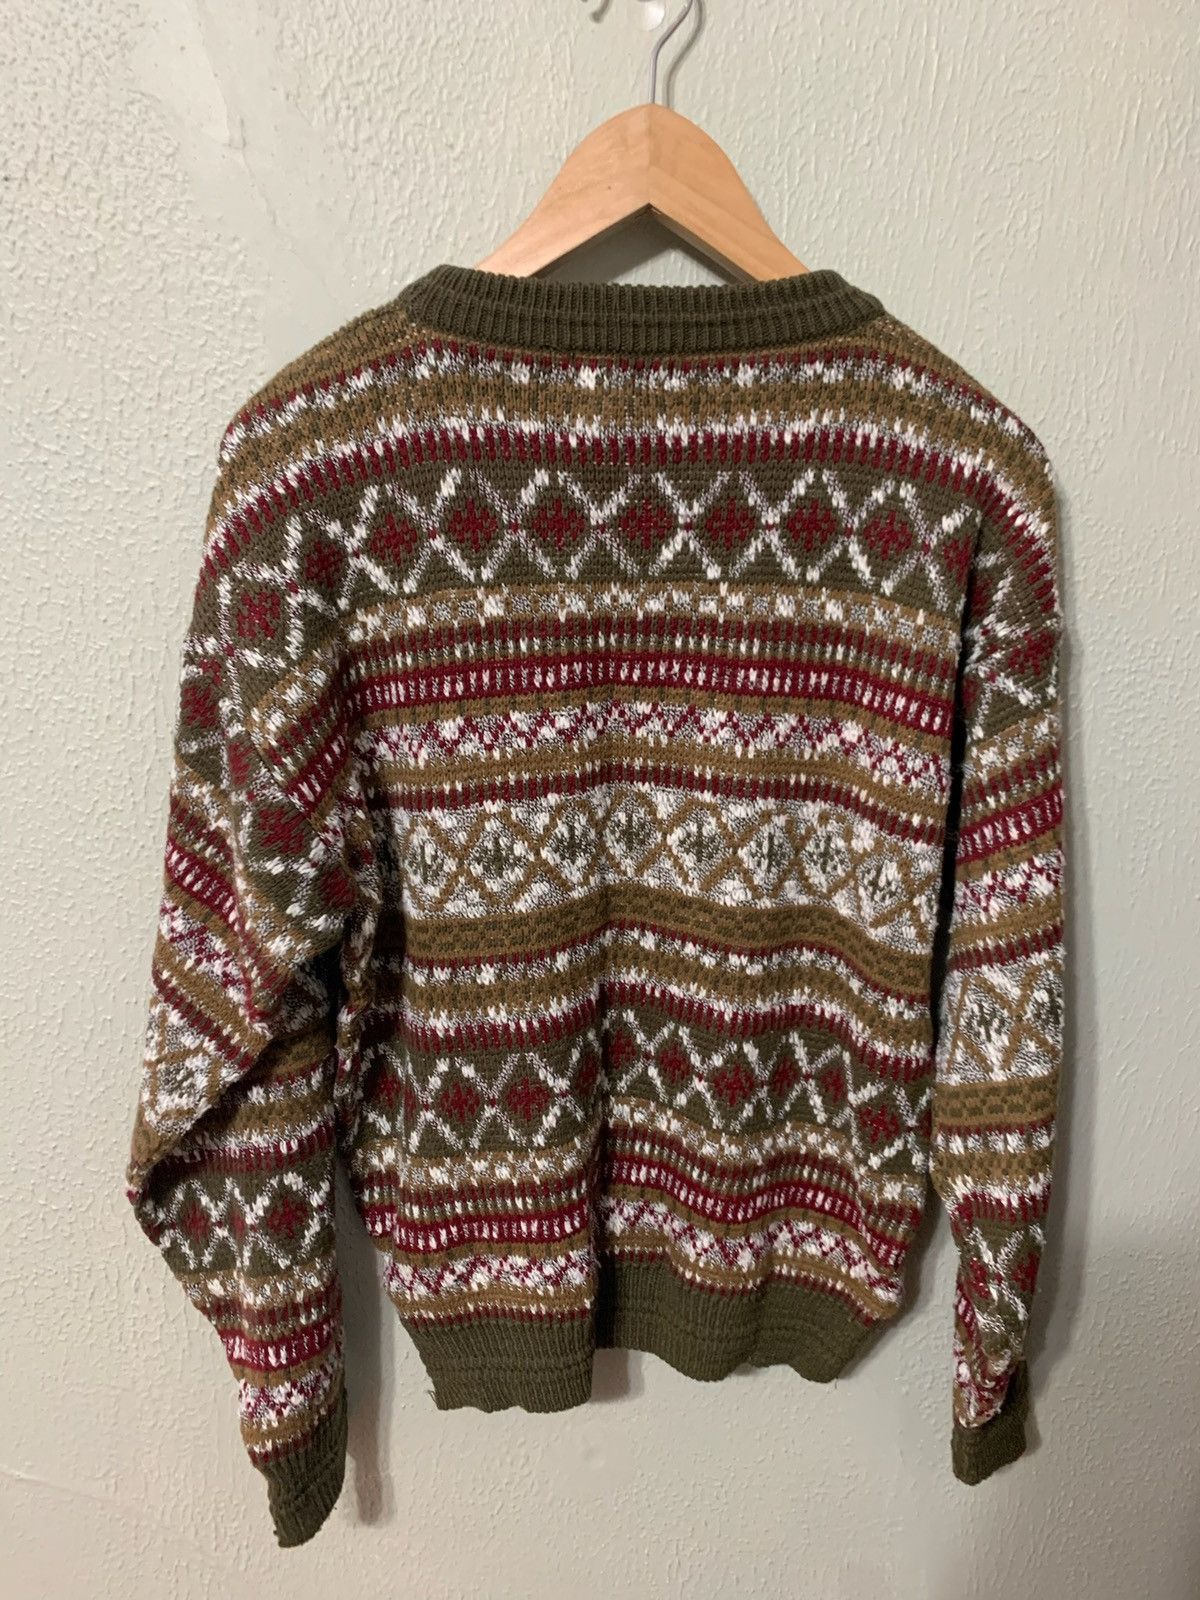 Vintage Vintage Cabin Brush Knit Sweater Size US S / EU 44-46 / 1 - 3 Preview